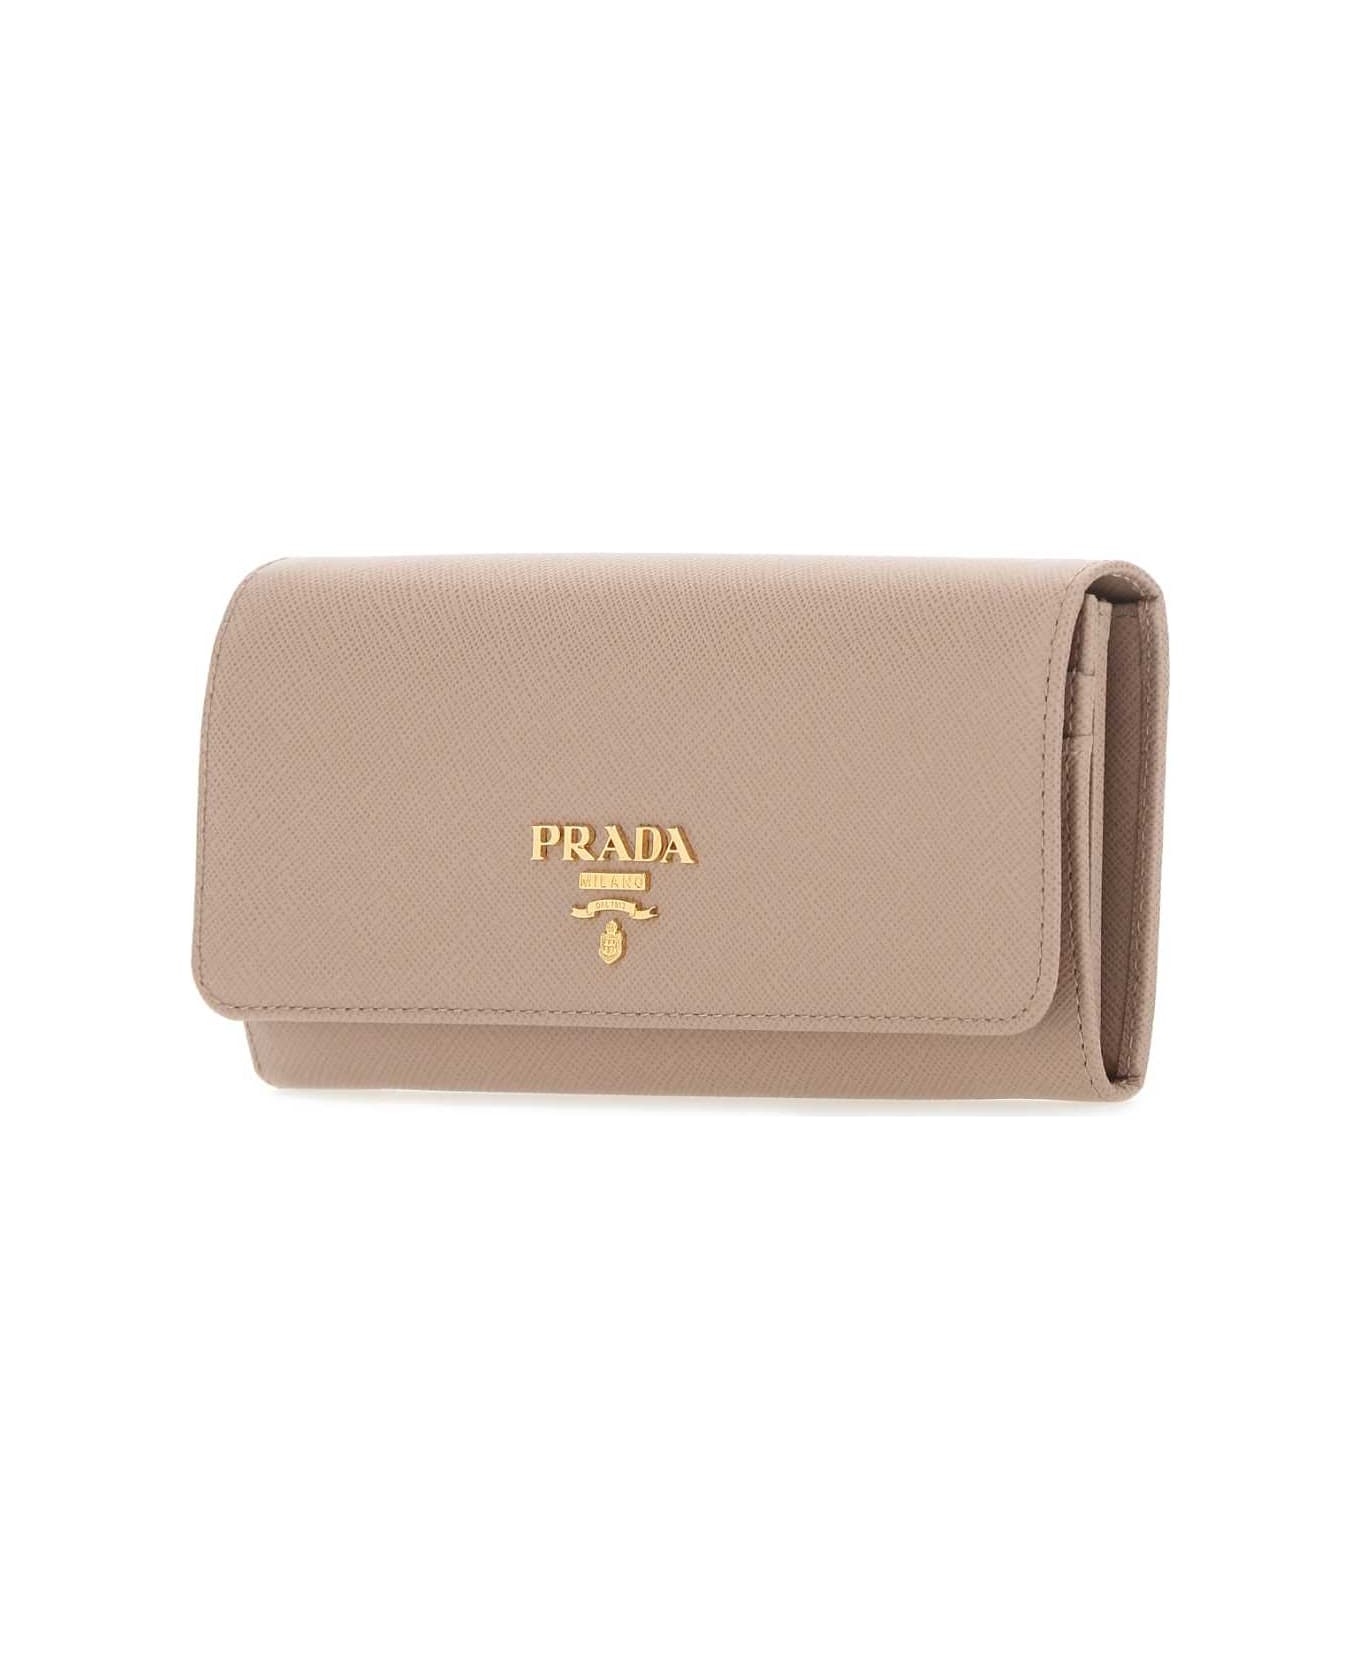 Prada Powder Pink Leather Wallet - F0236